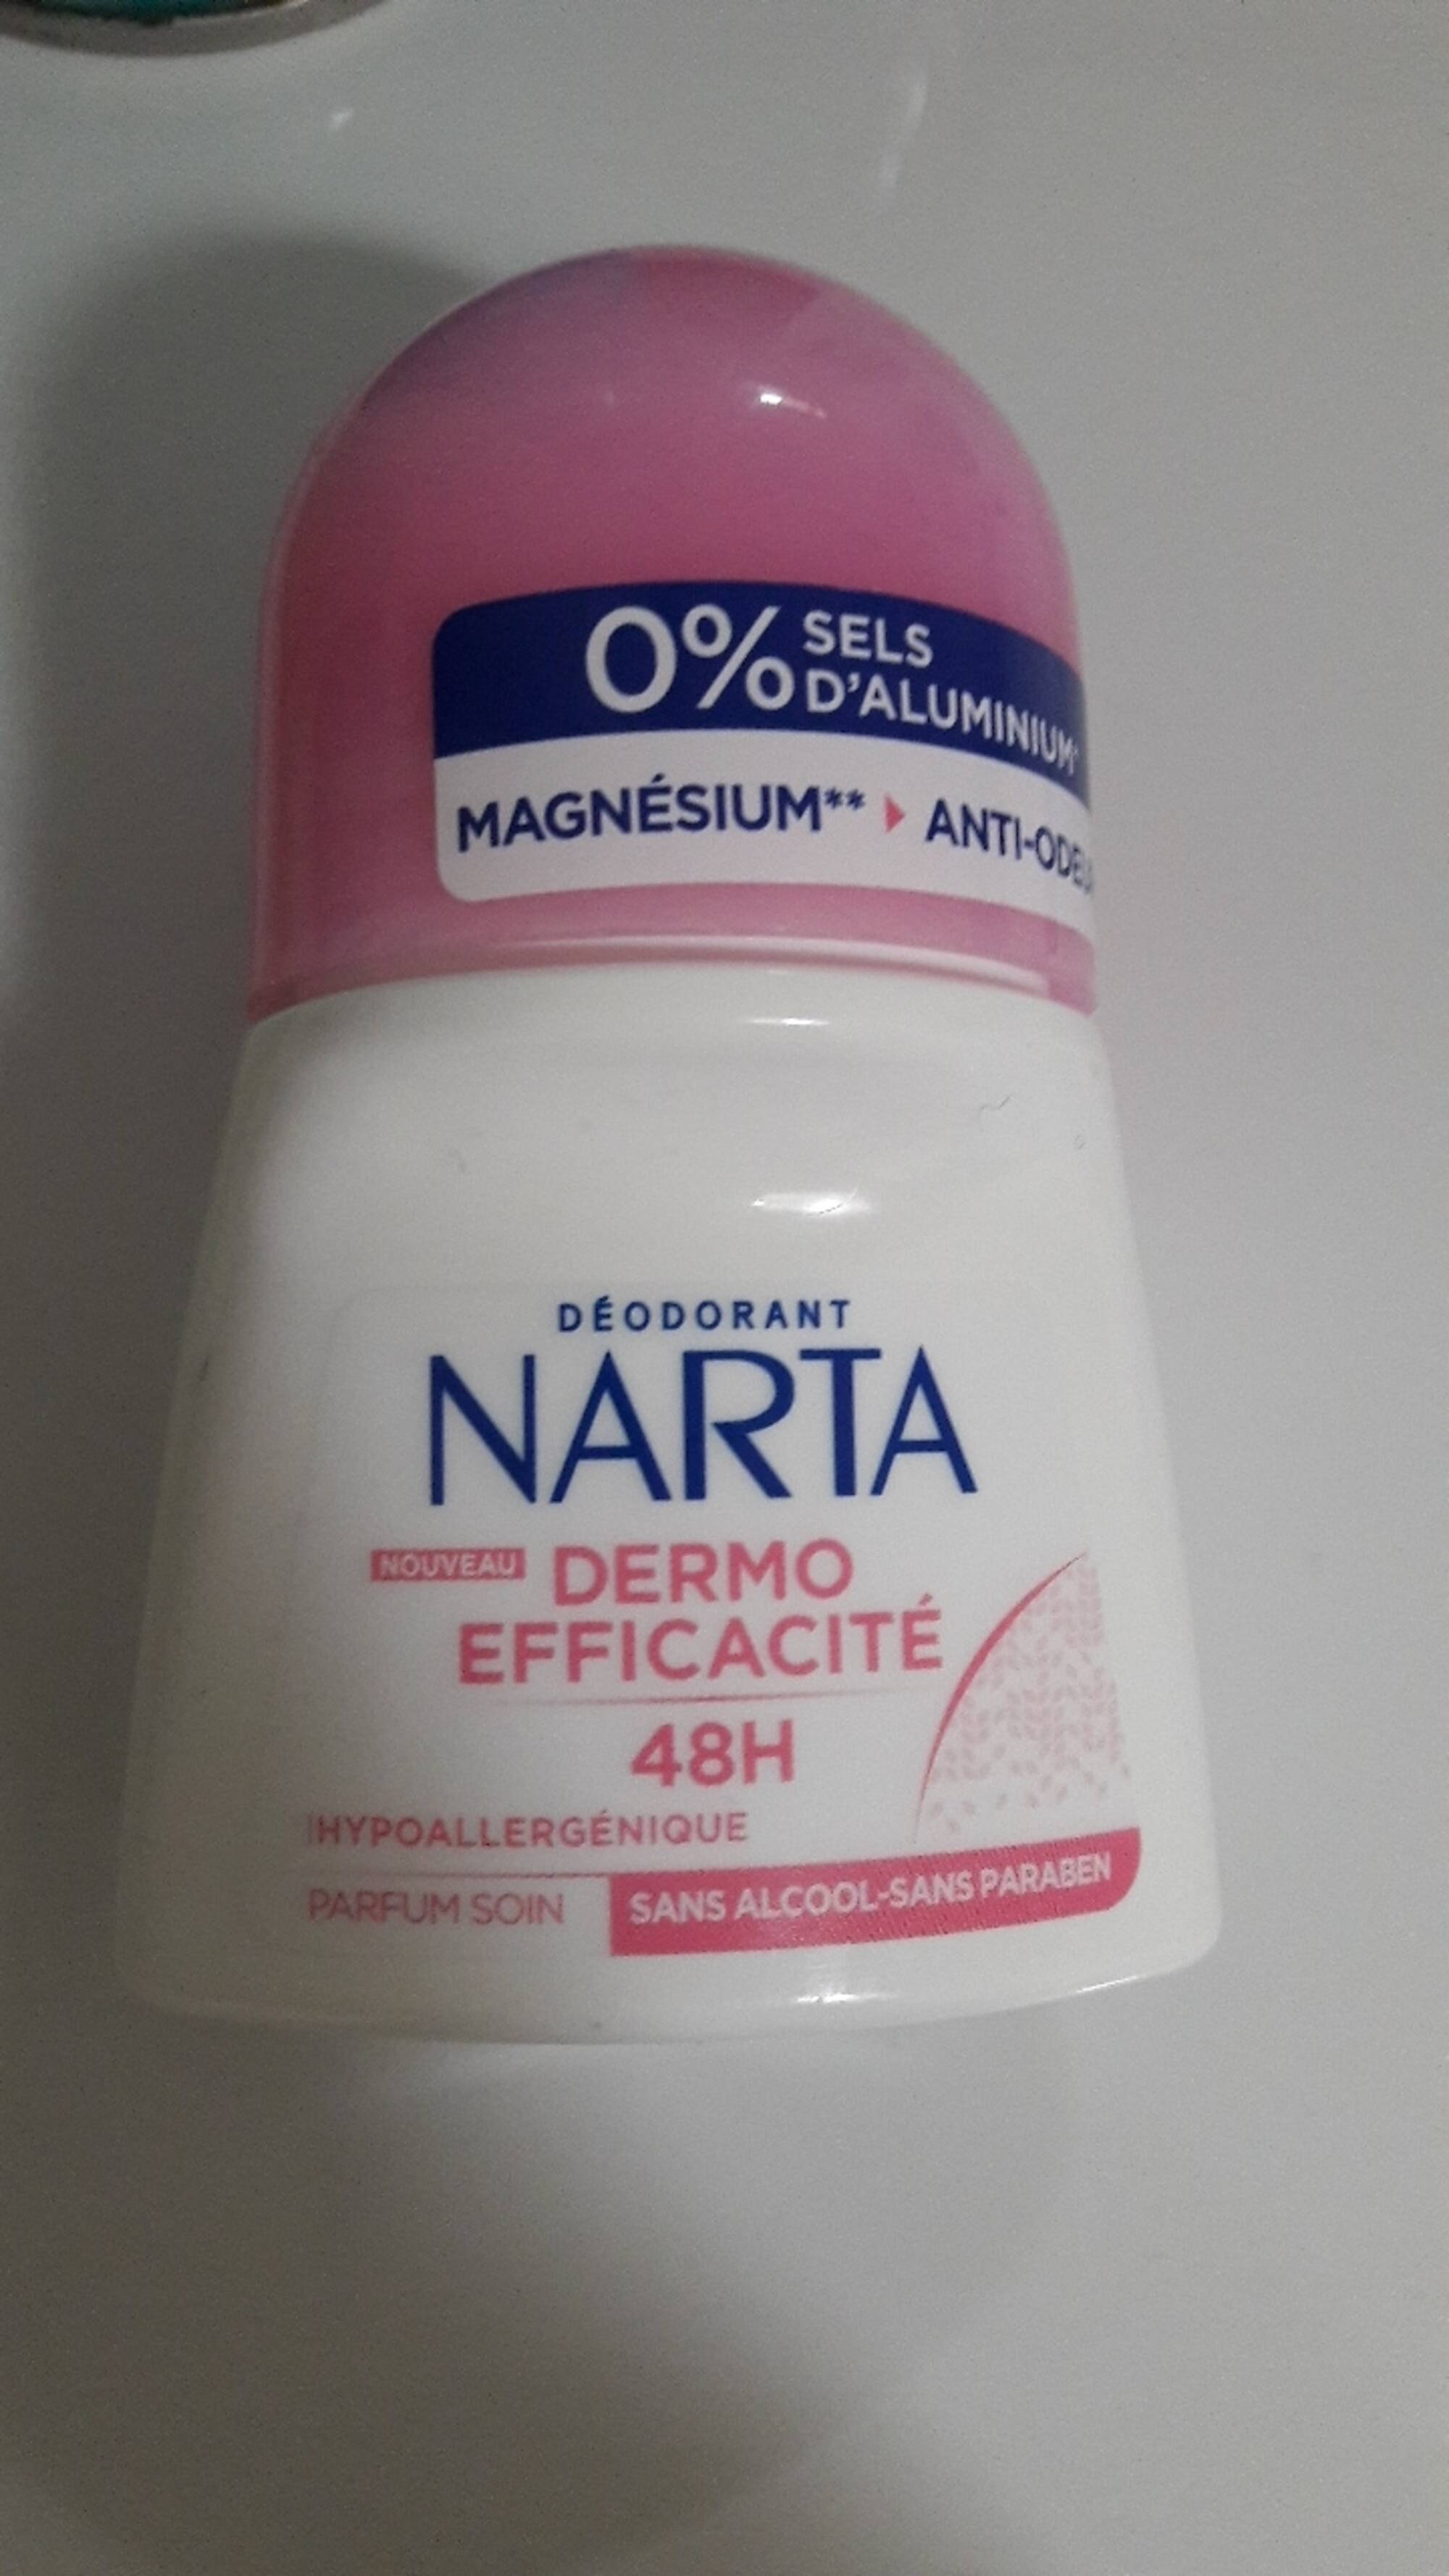 NARTA - Anti-odeurs - Déodorant efficacité 48h